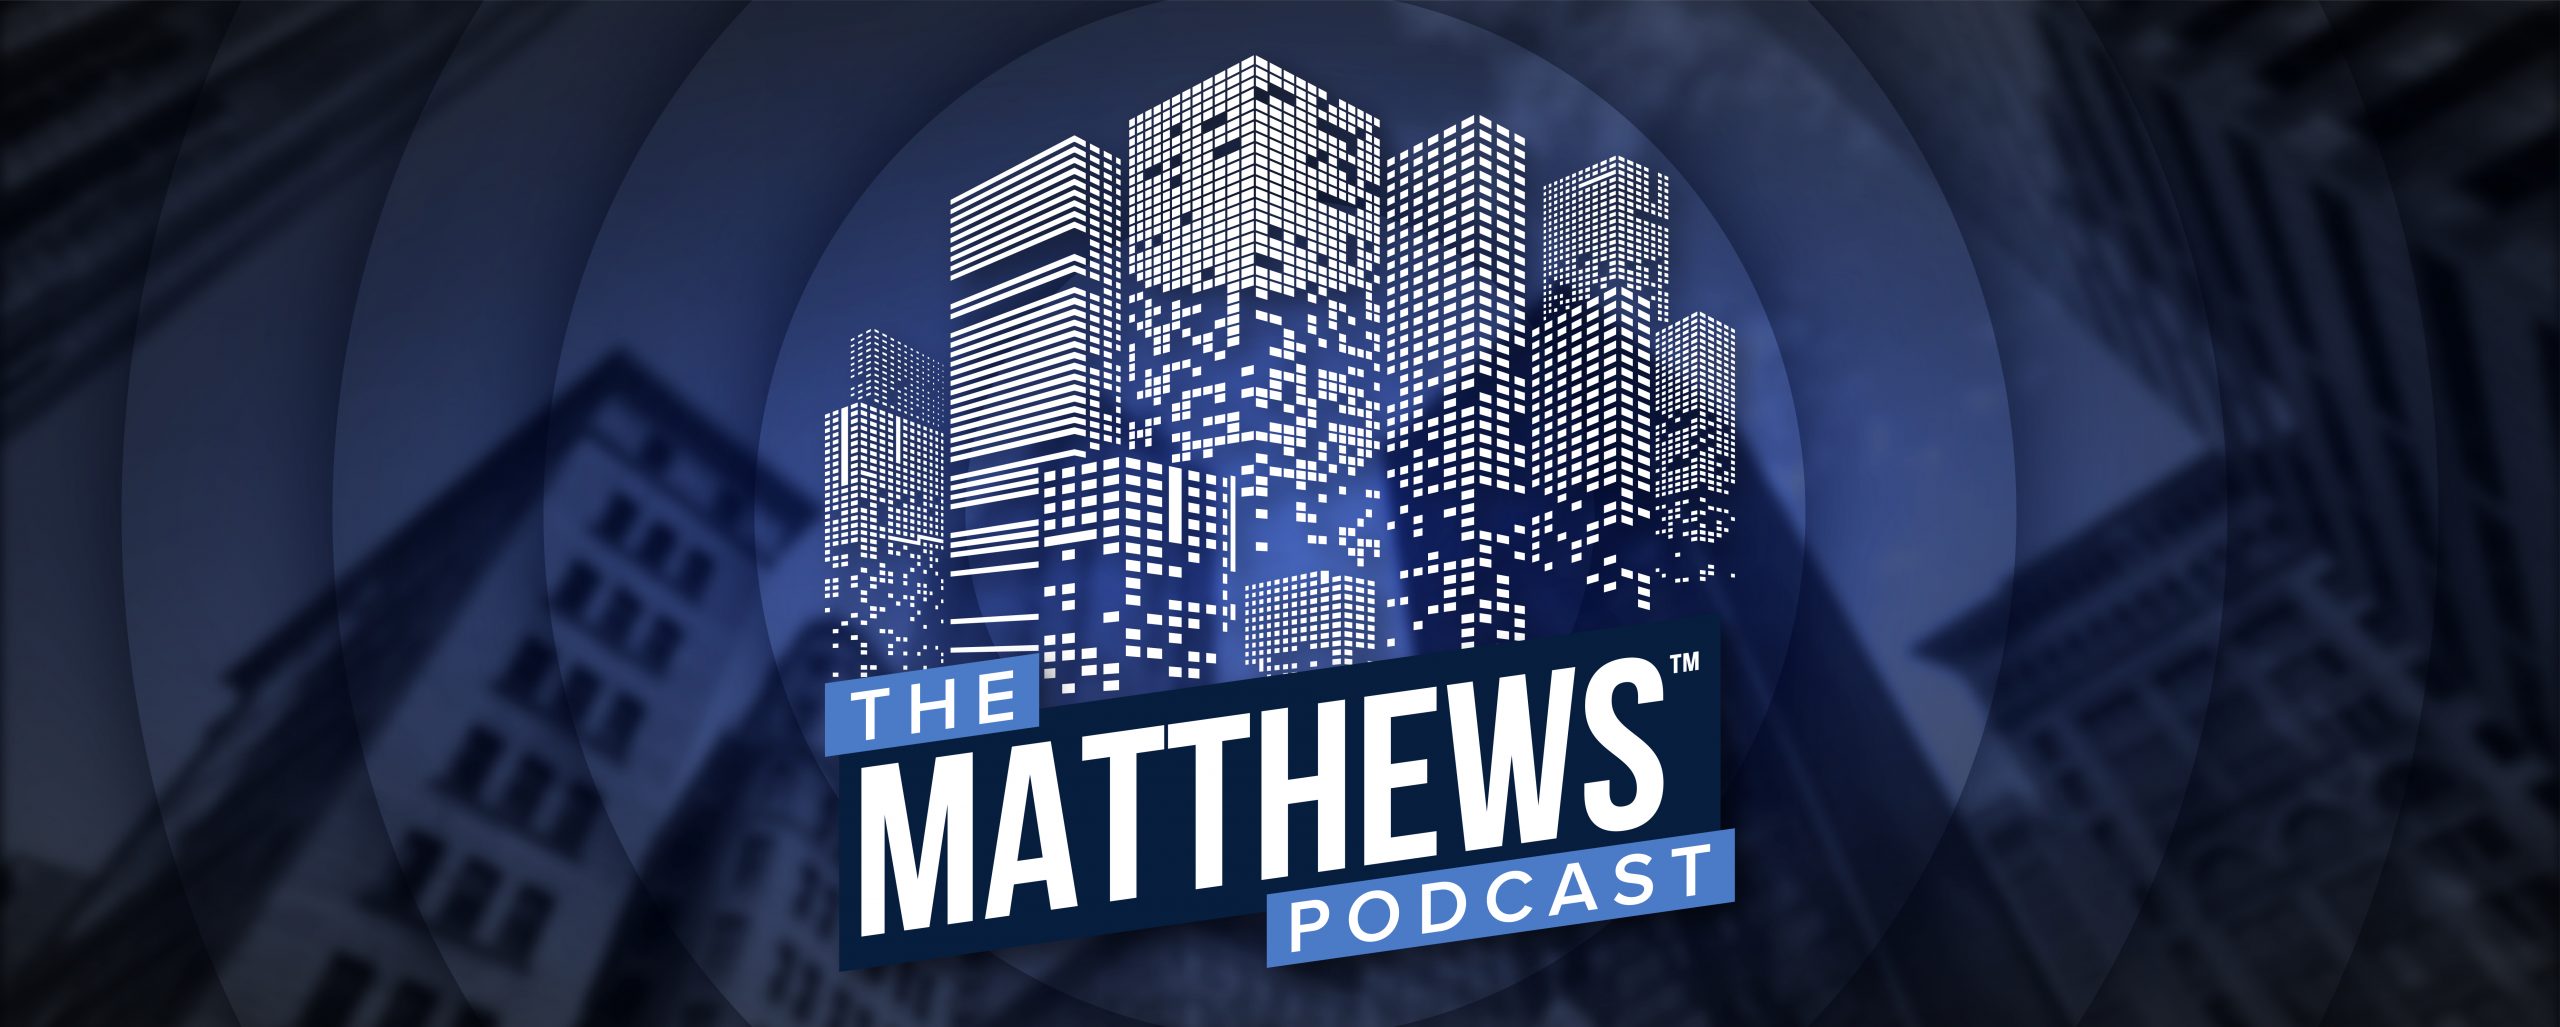 Matthews Podcast